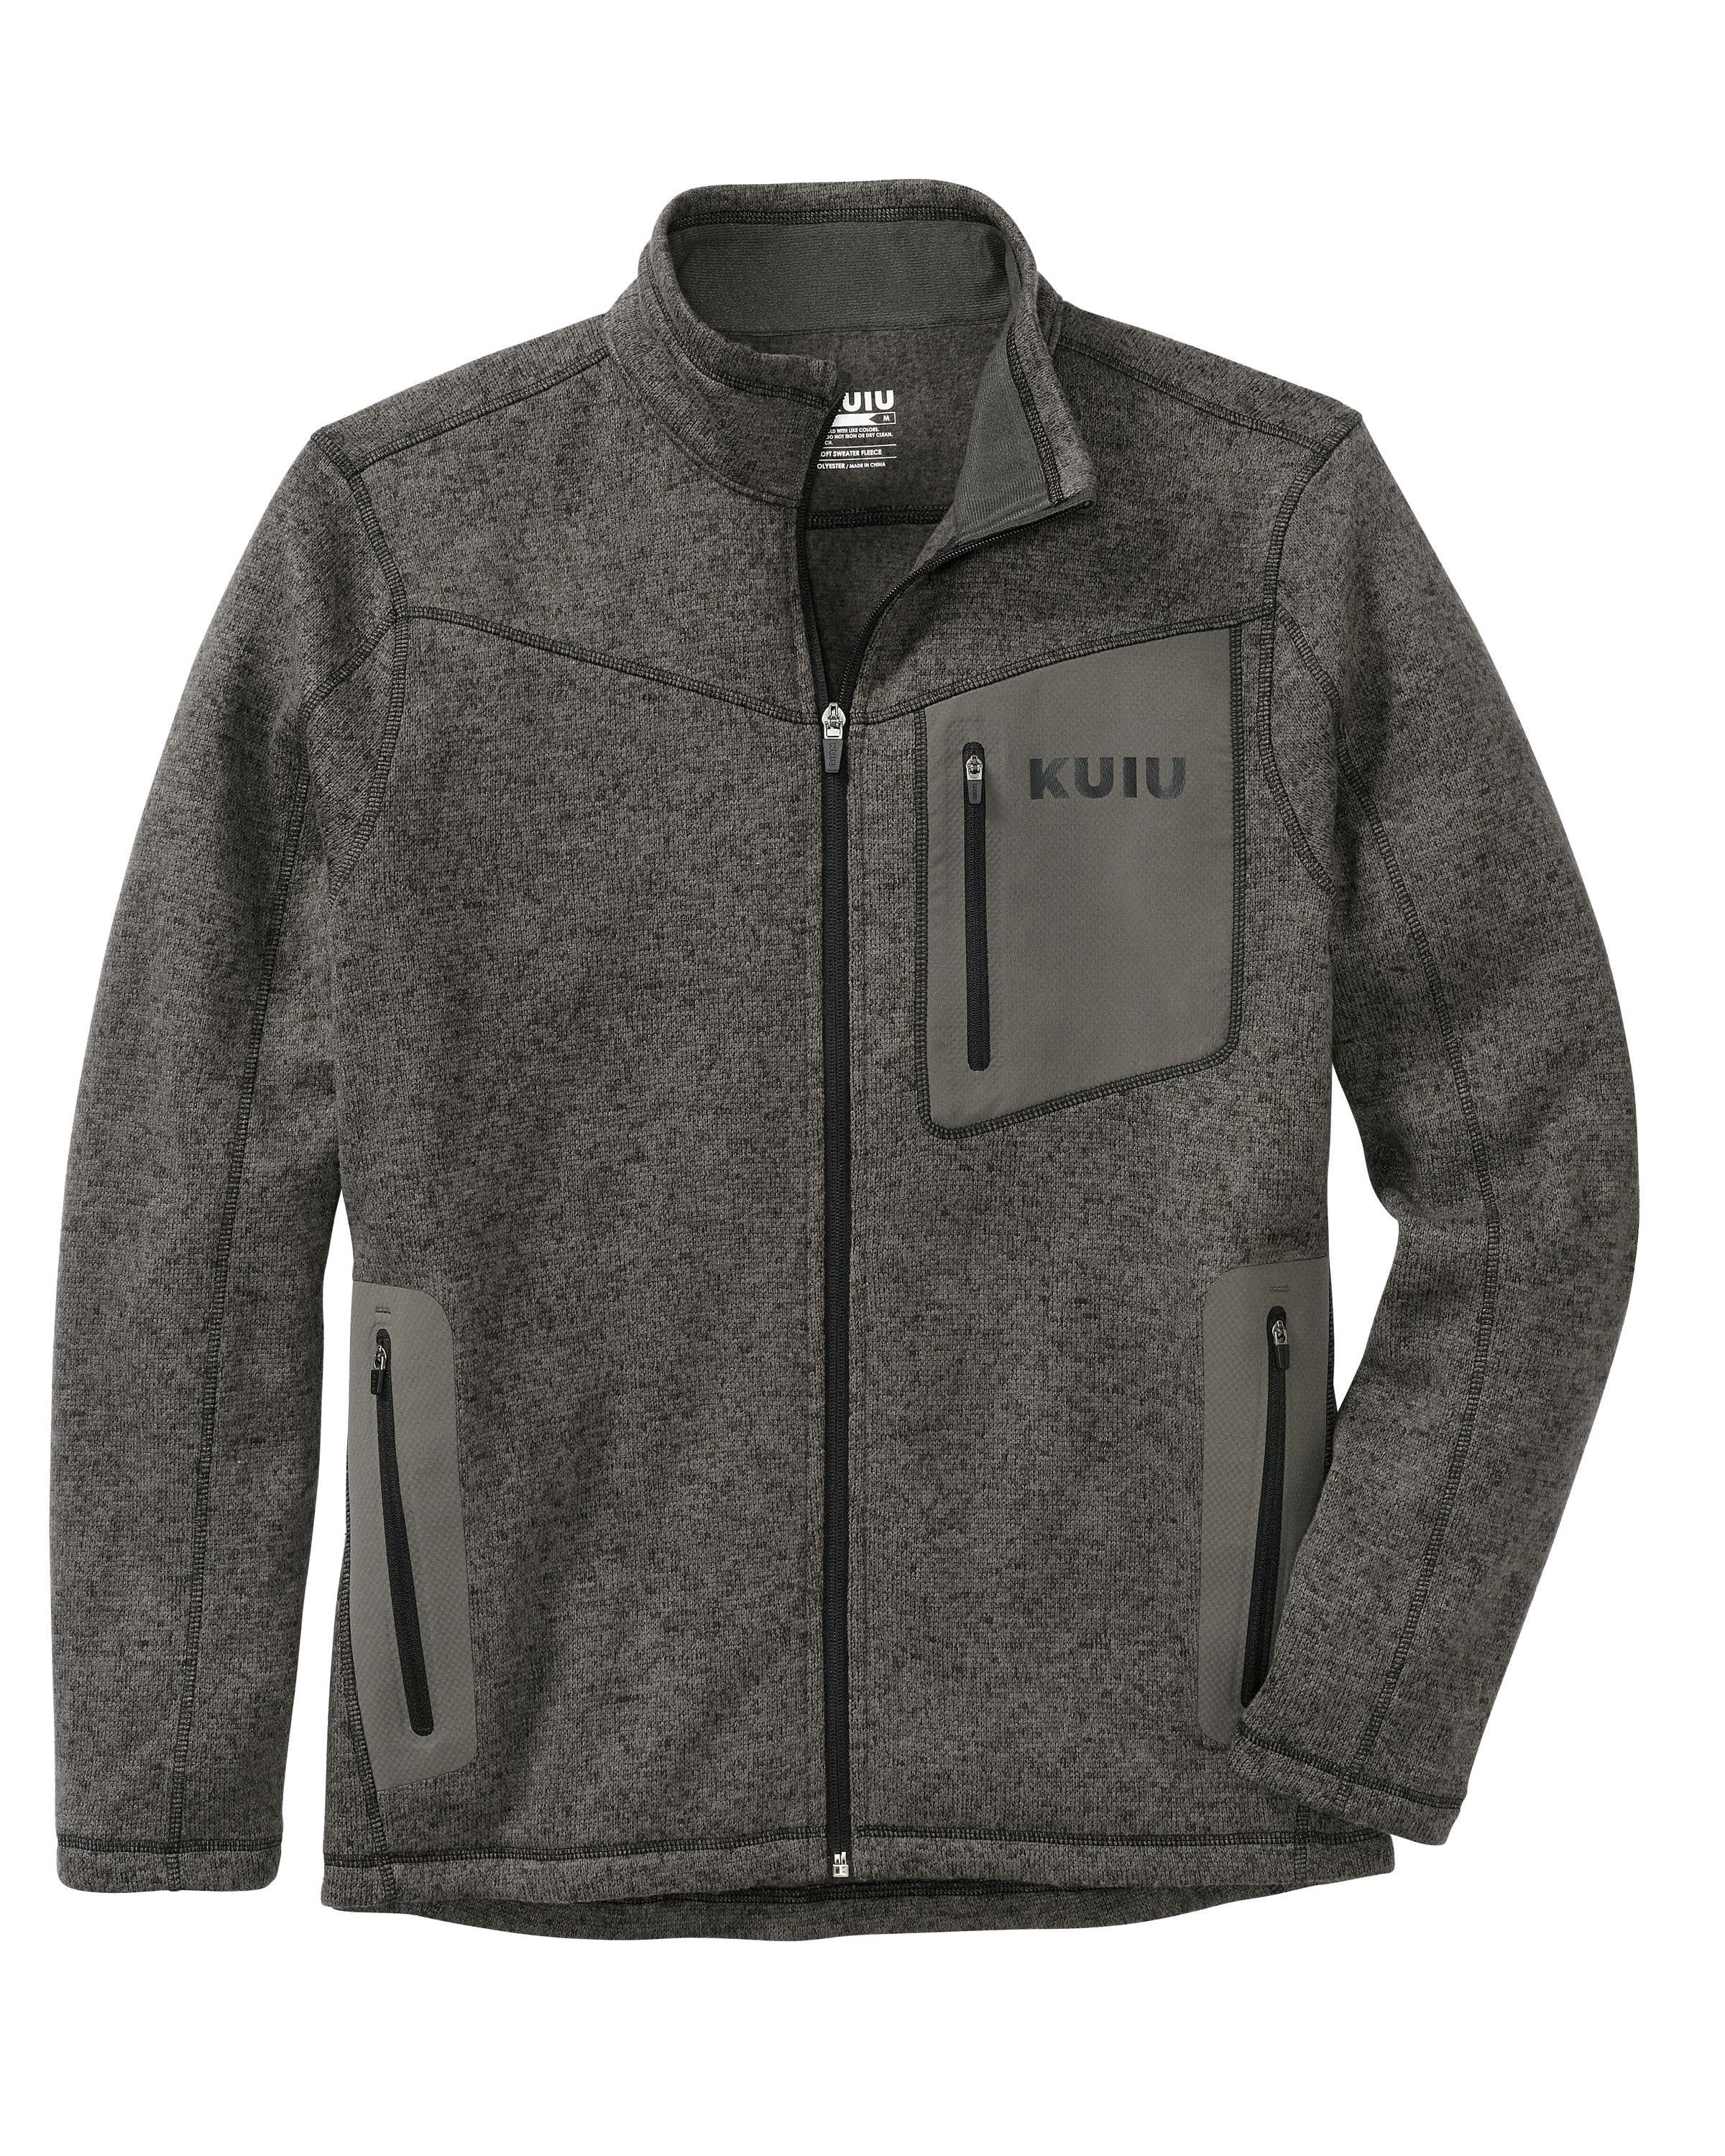 KUIU Base Camp Full Zip Sweater in Charcoal | Size 2XL